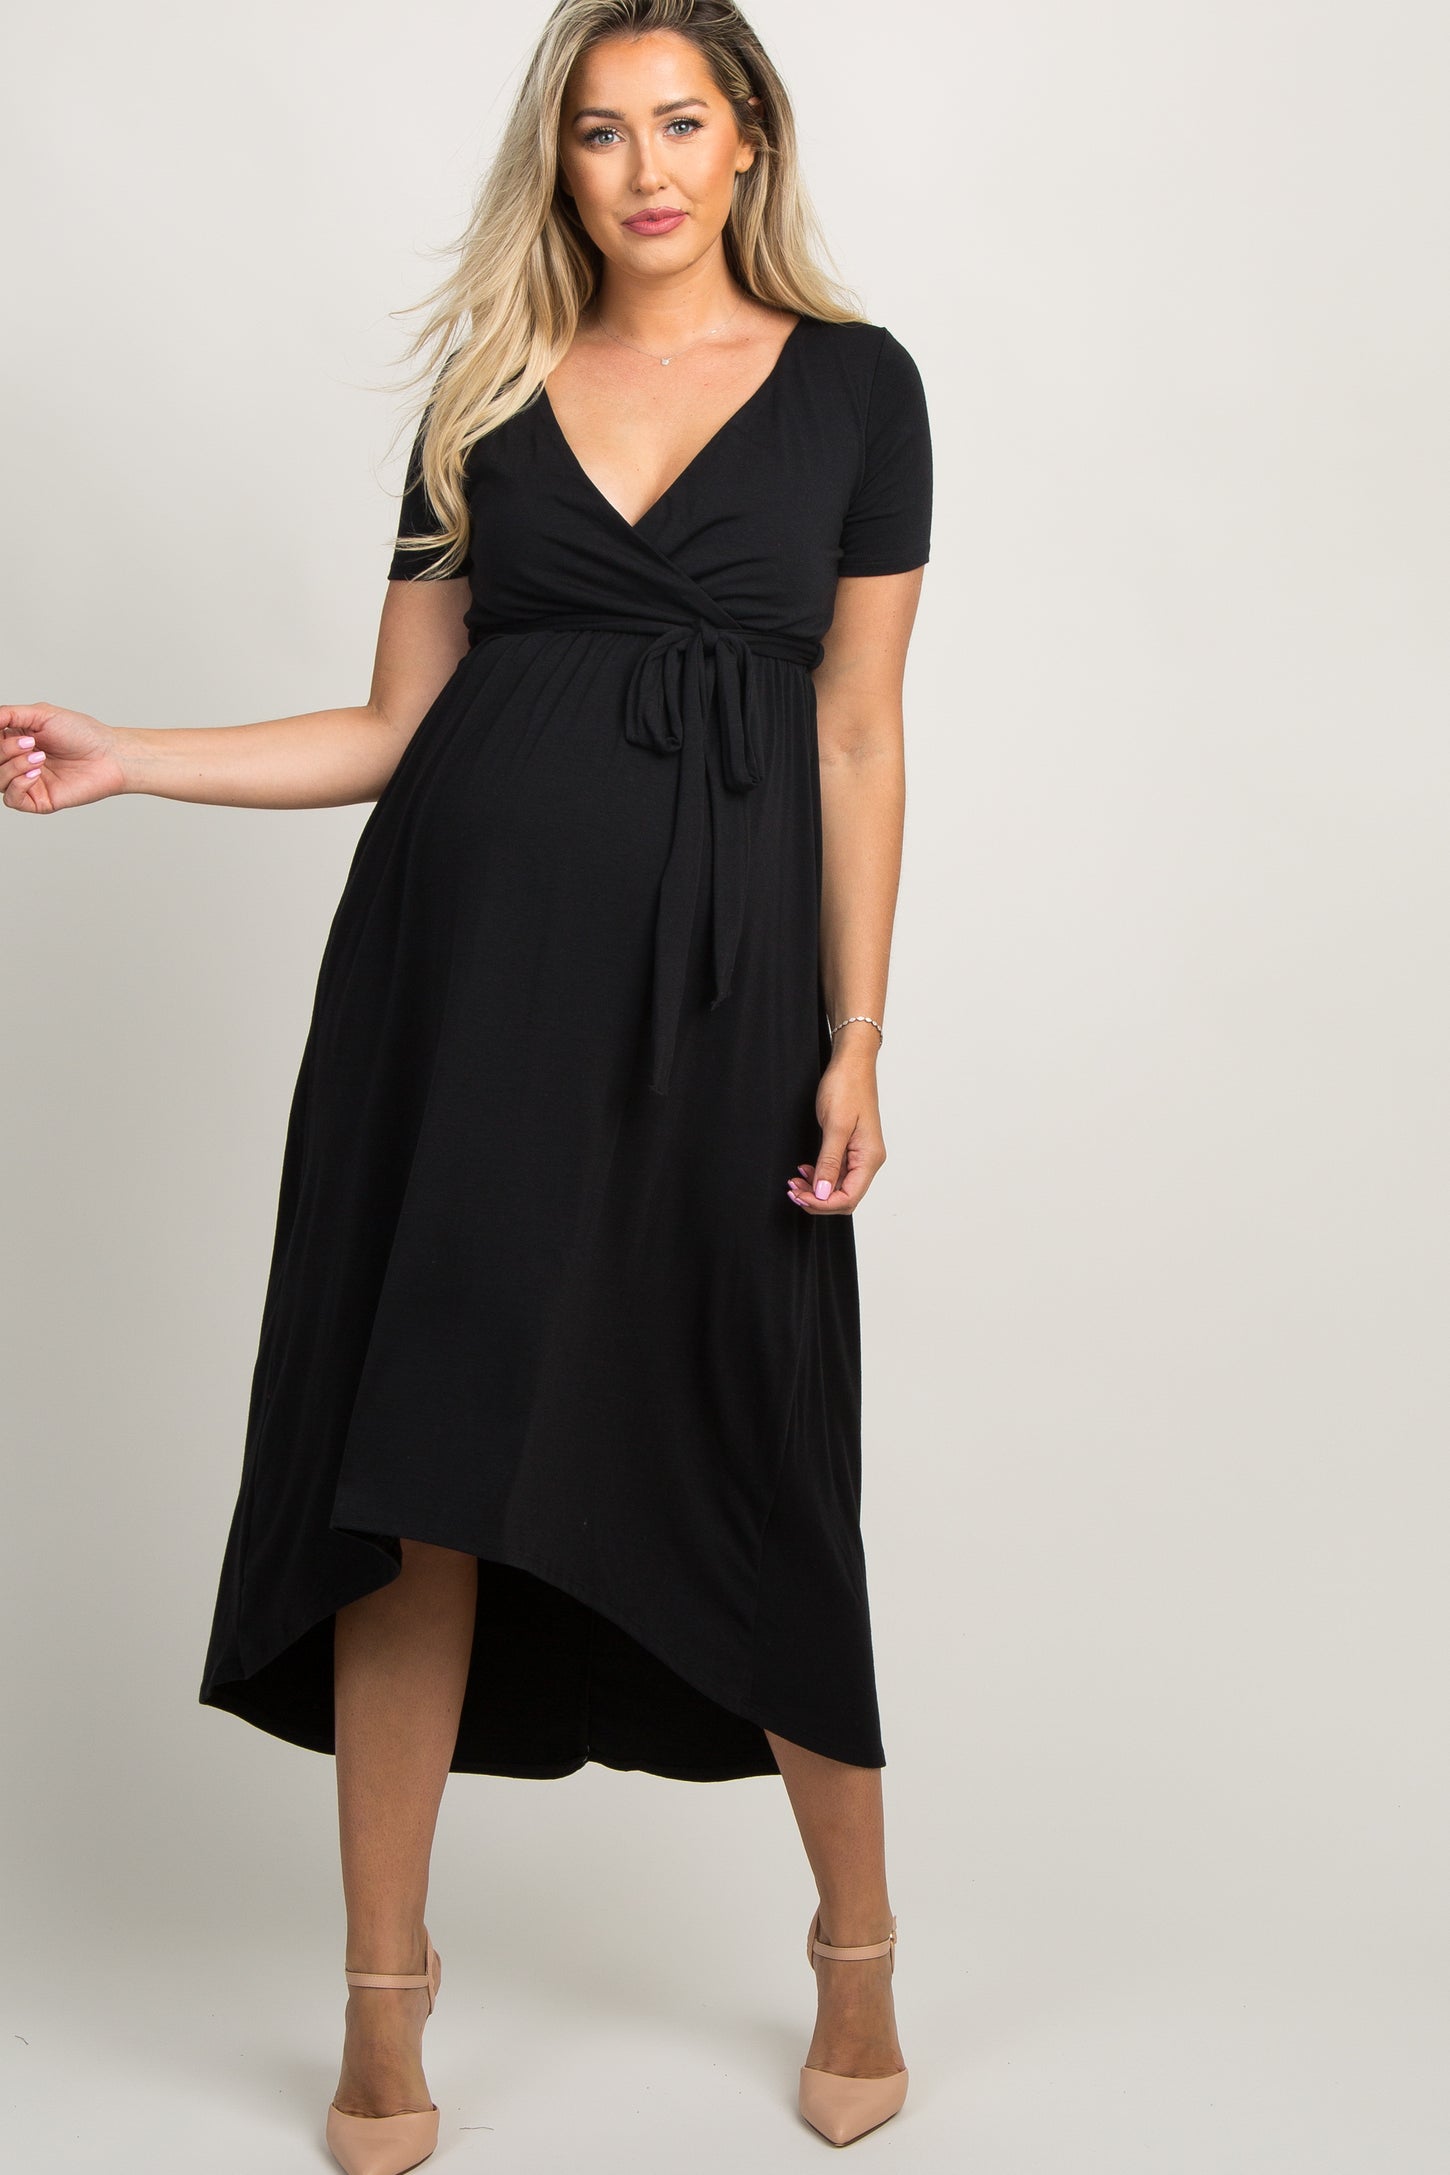 Black Solid Hi-Low Maternity Wrap Dress